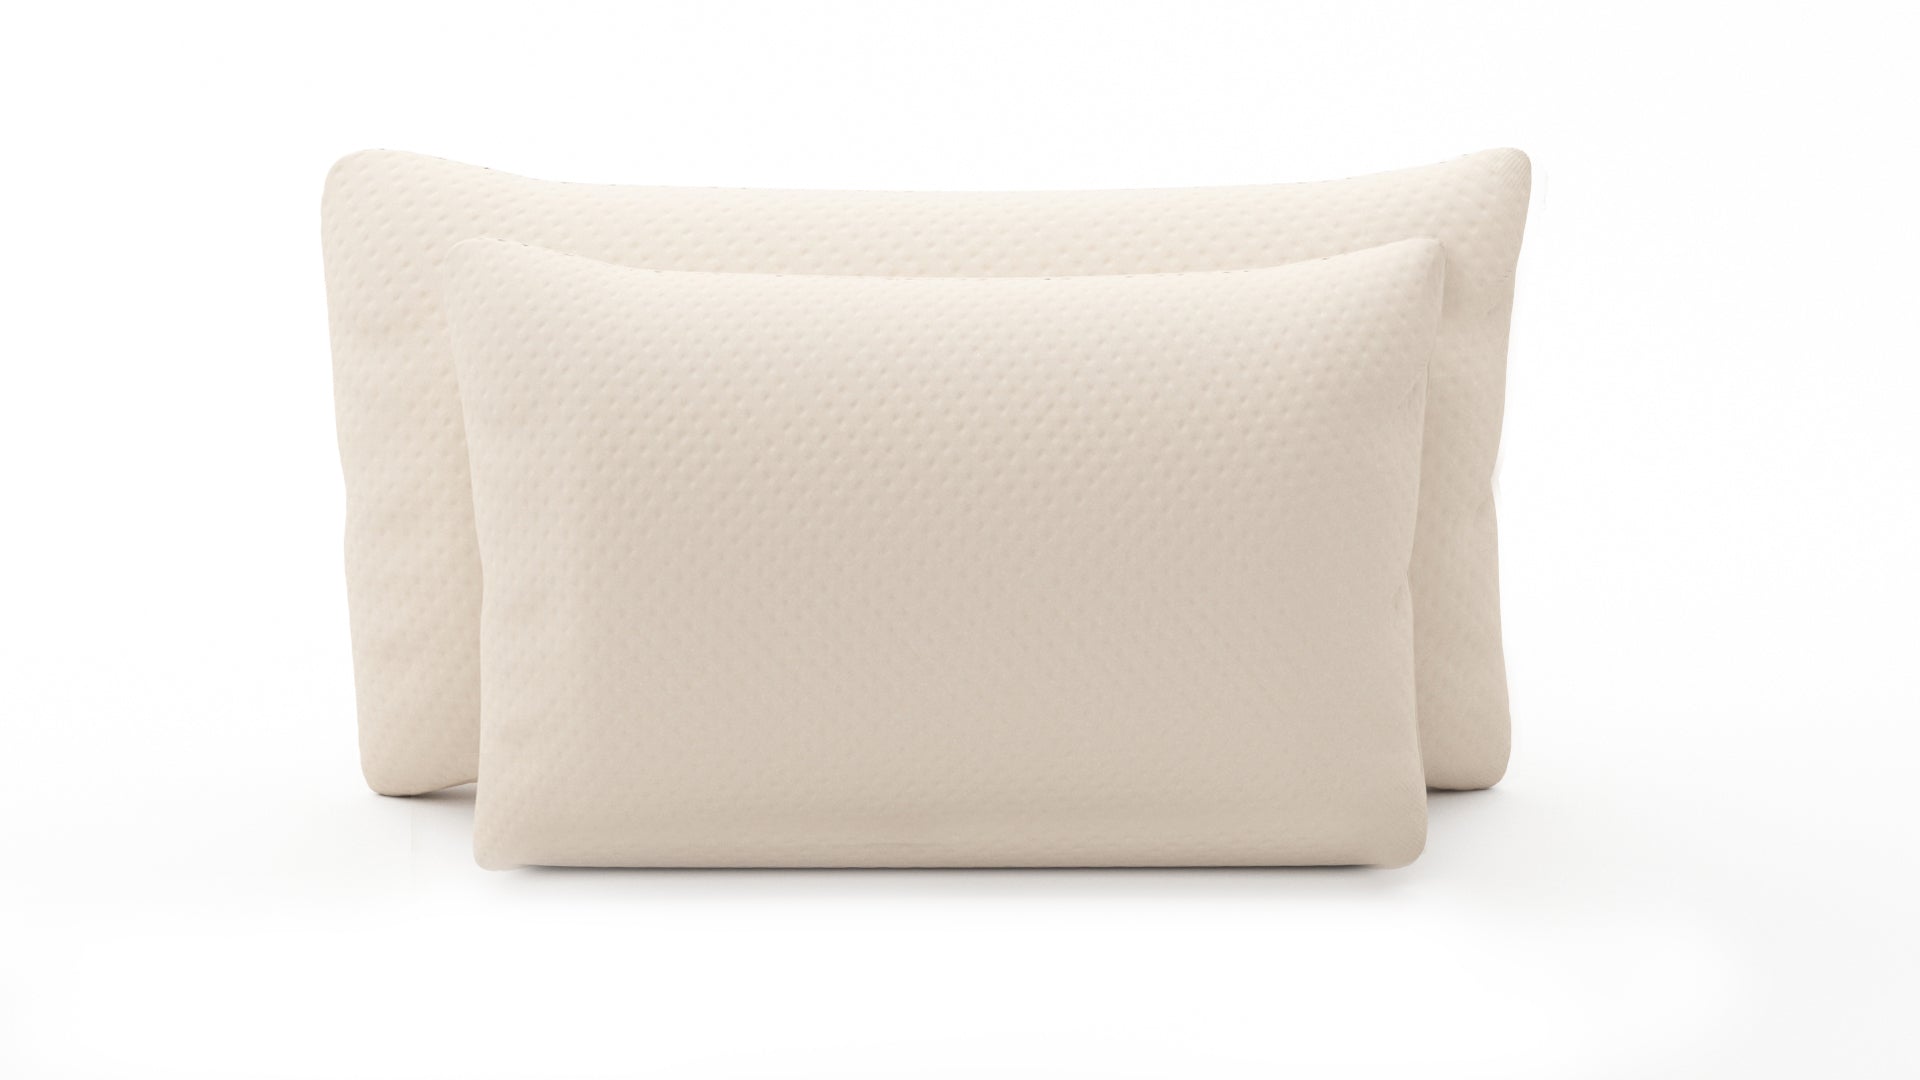 Certified Organic Shredded Latex Pillow - Organic Mattresses, Inc. - Sleep Organic!®